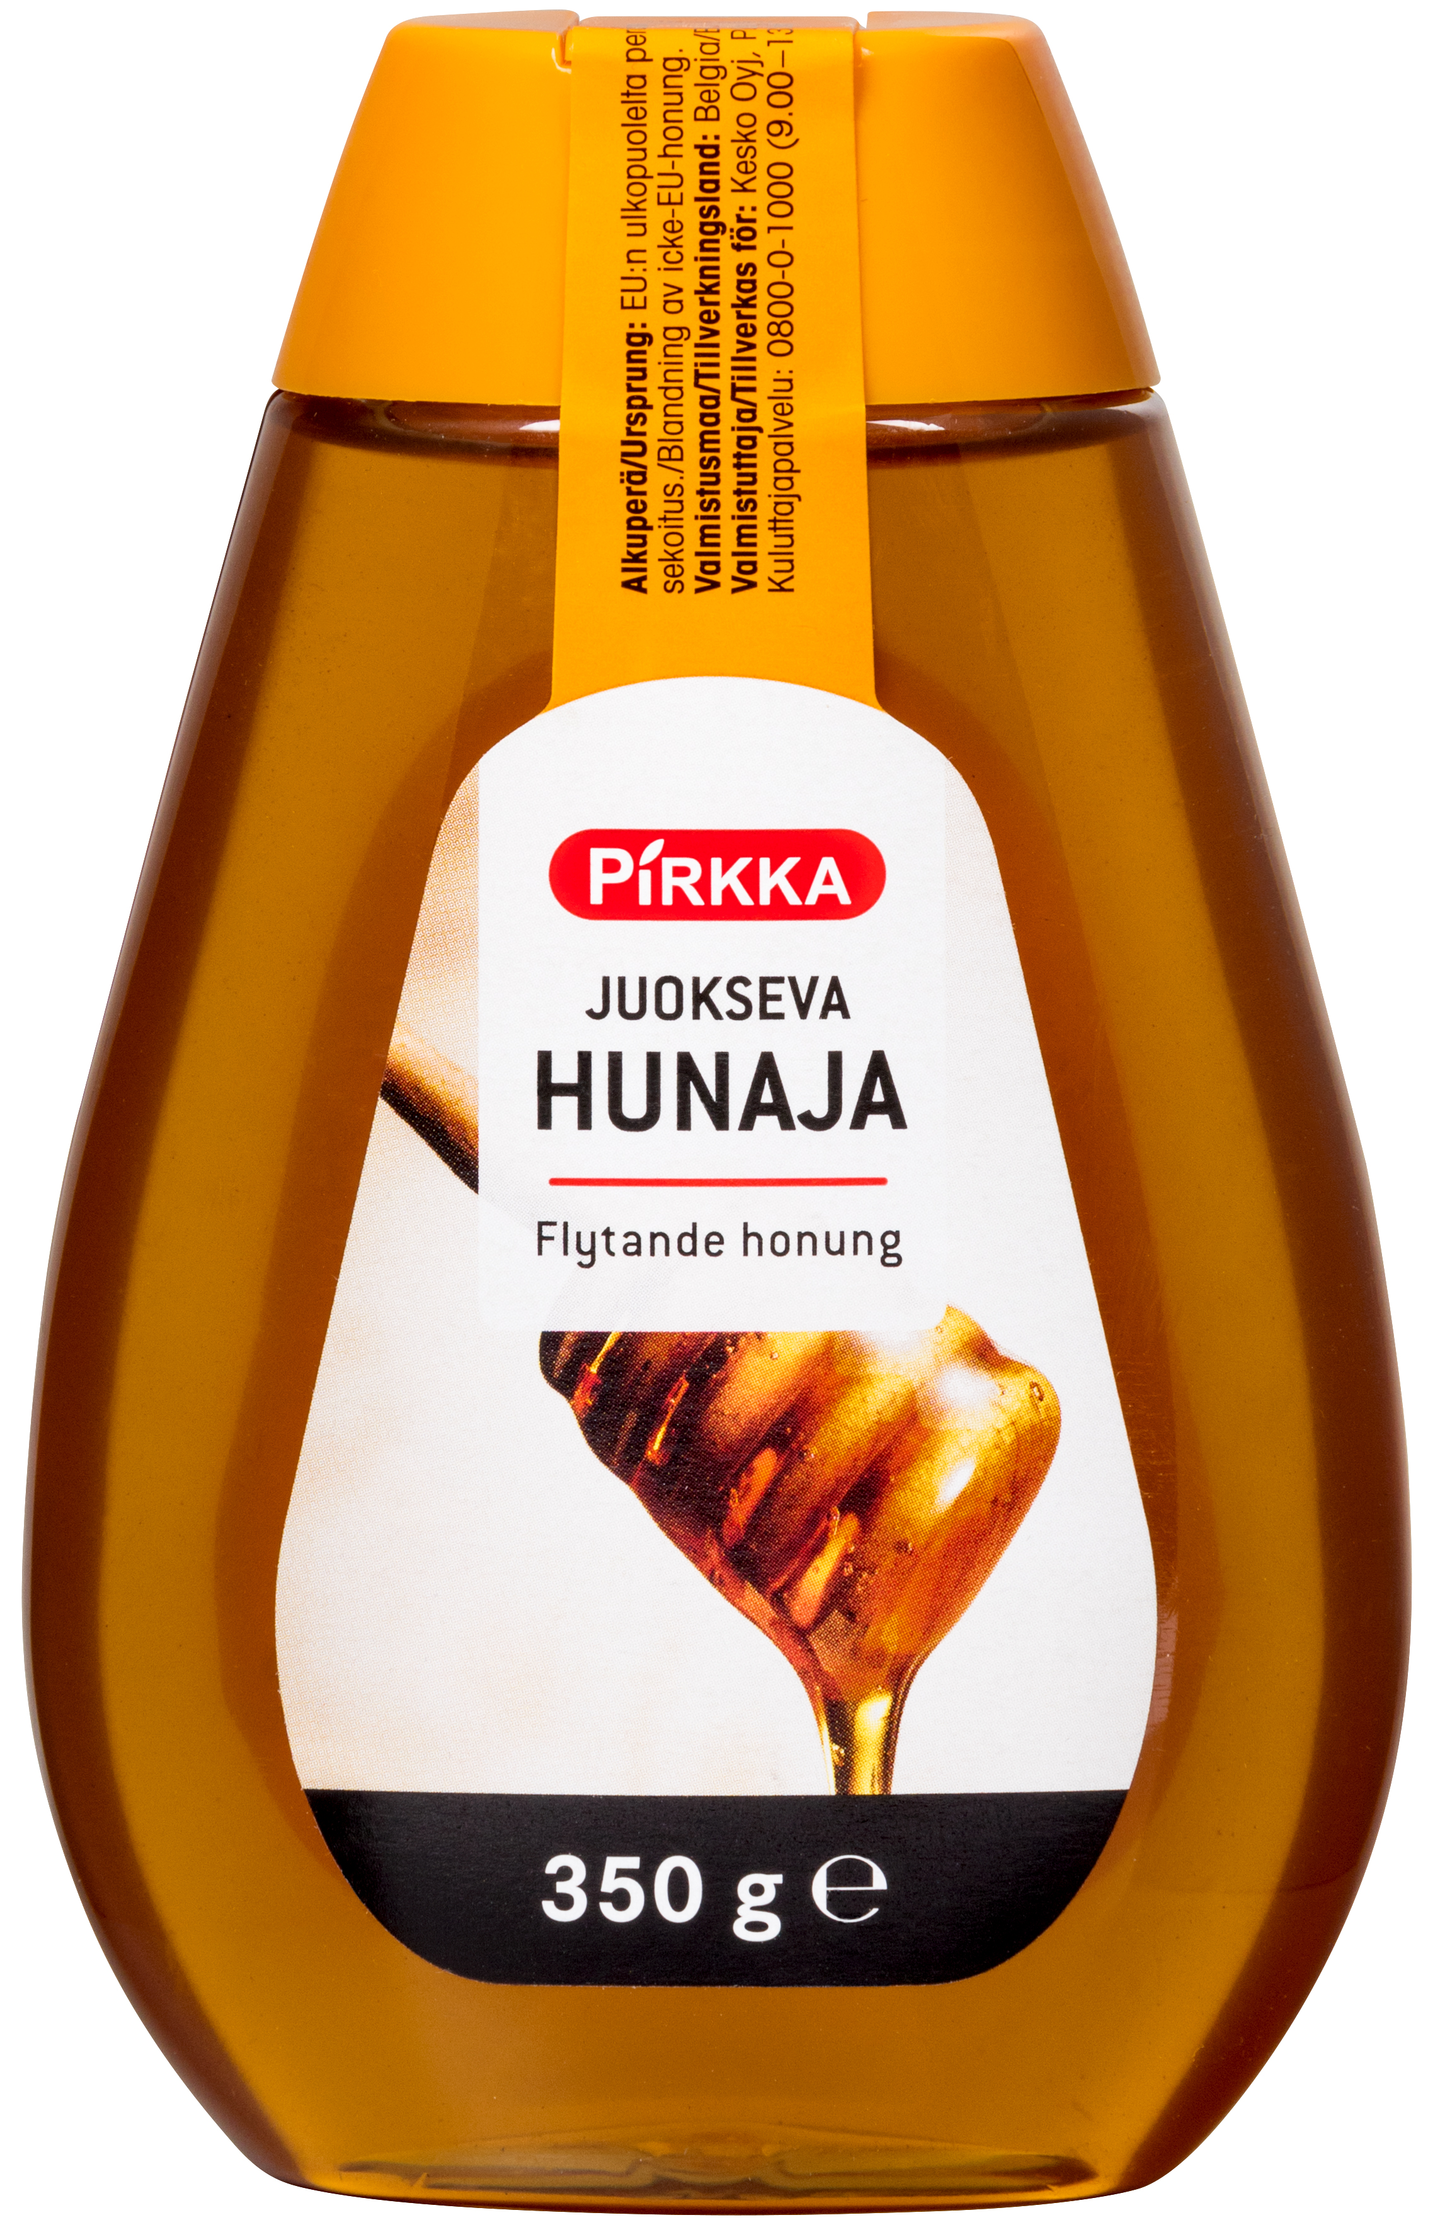 Pirkka juokseva hunaja 350g | K-Ruoka Verkkokauppa